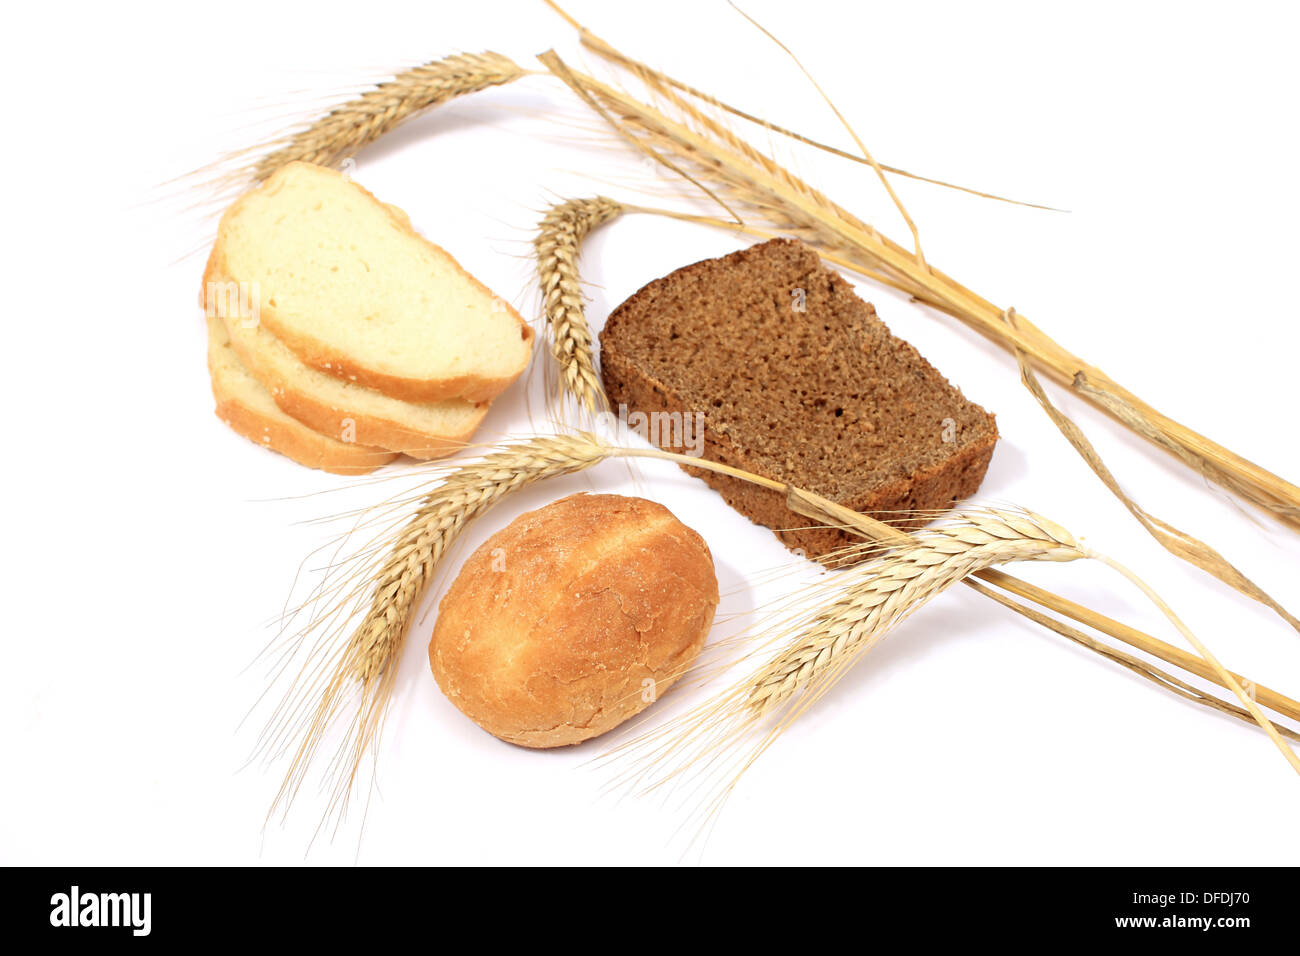 Bread bun and stalks of wheat on a white background, Хлеб булочки и стебли колоски пшеницы на белом фоне Stock Photo